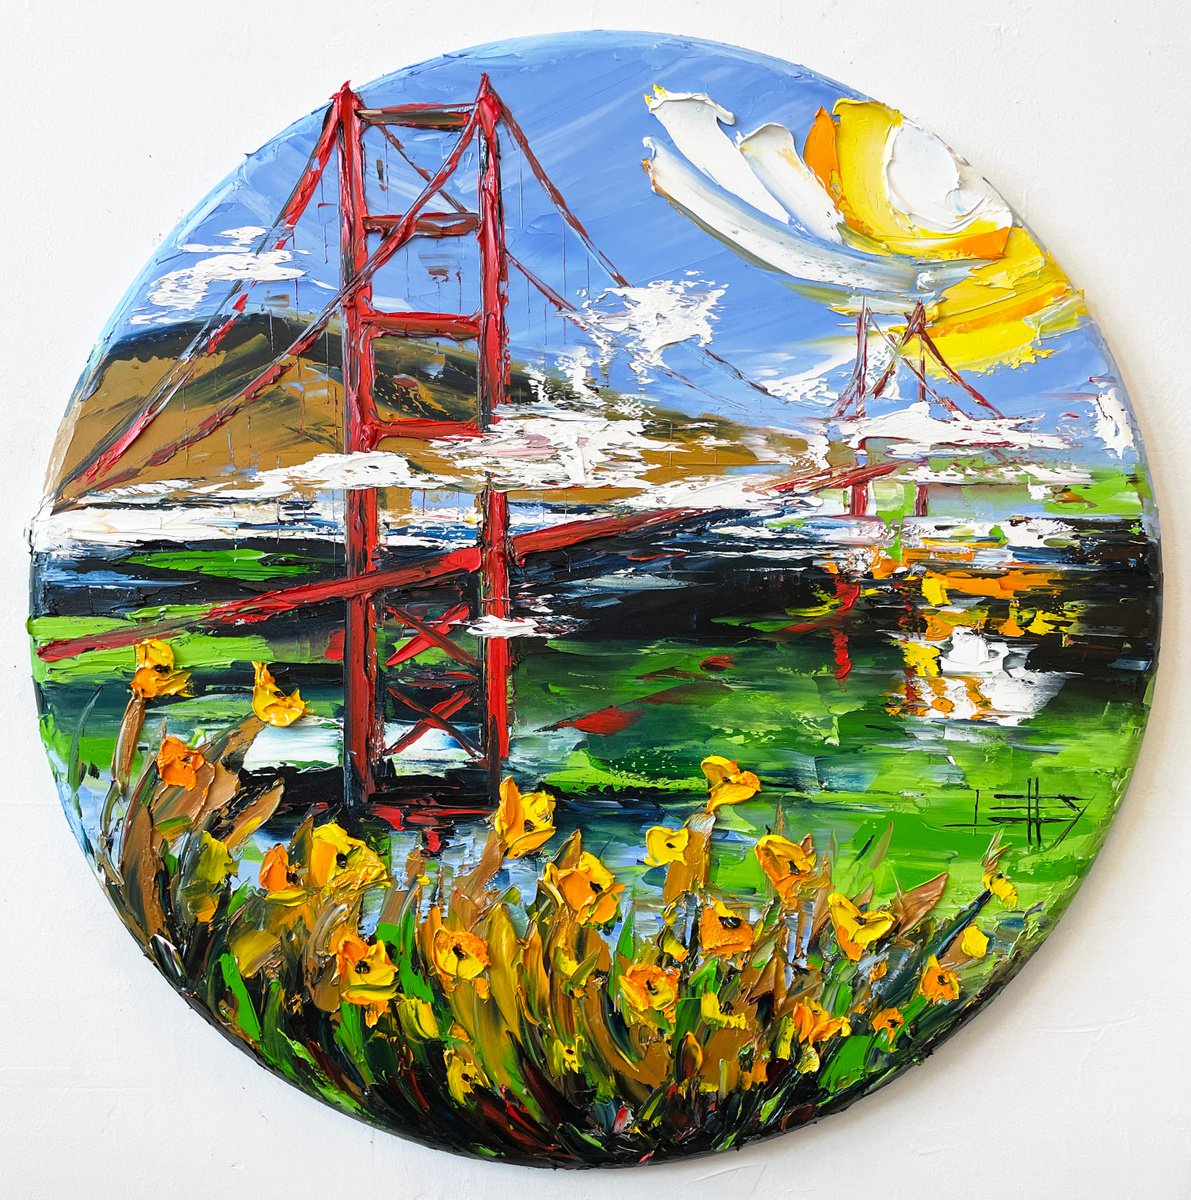 I Left My Heart In San Francisco by Lisa Elley